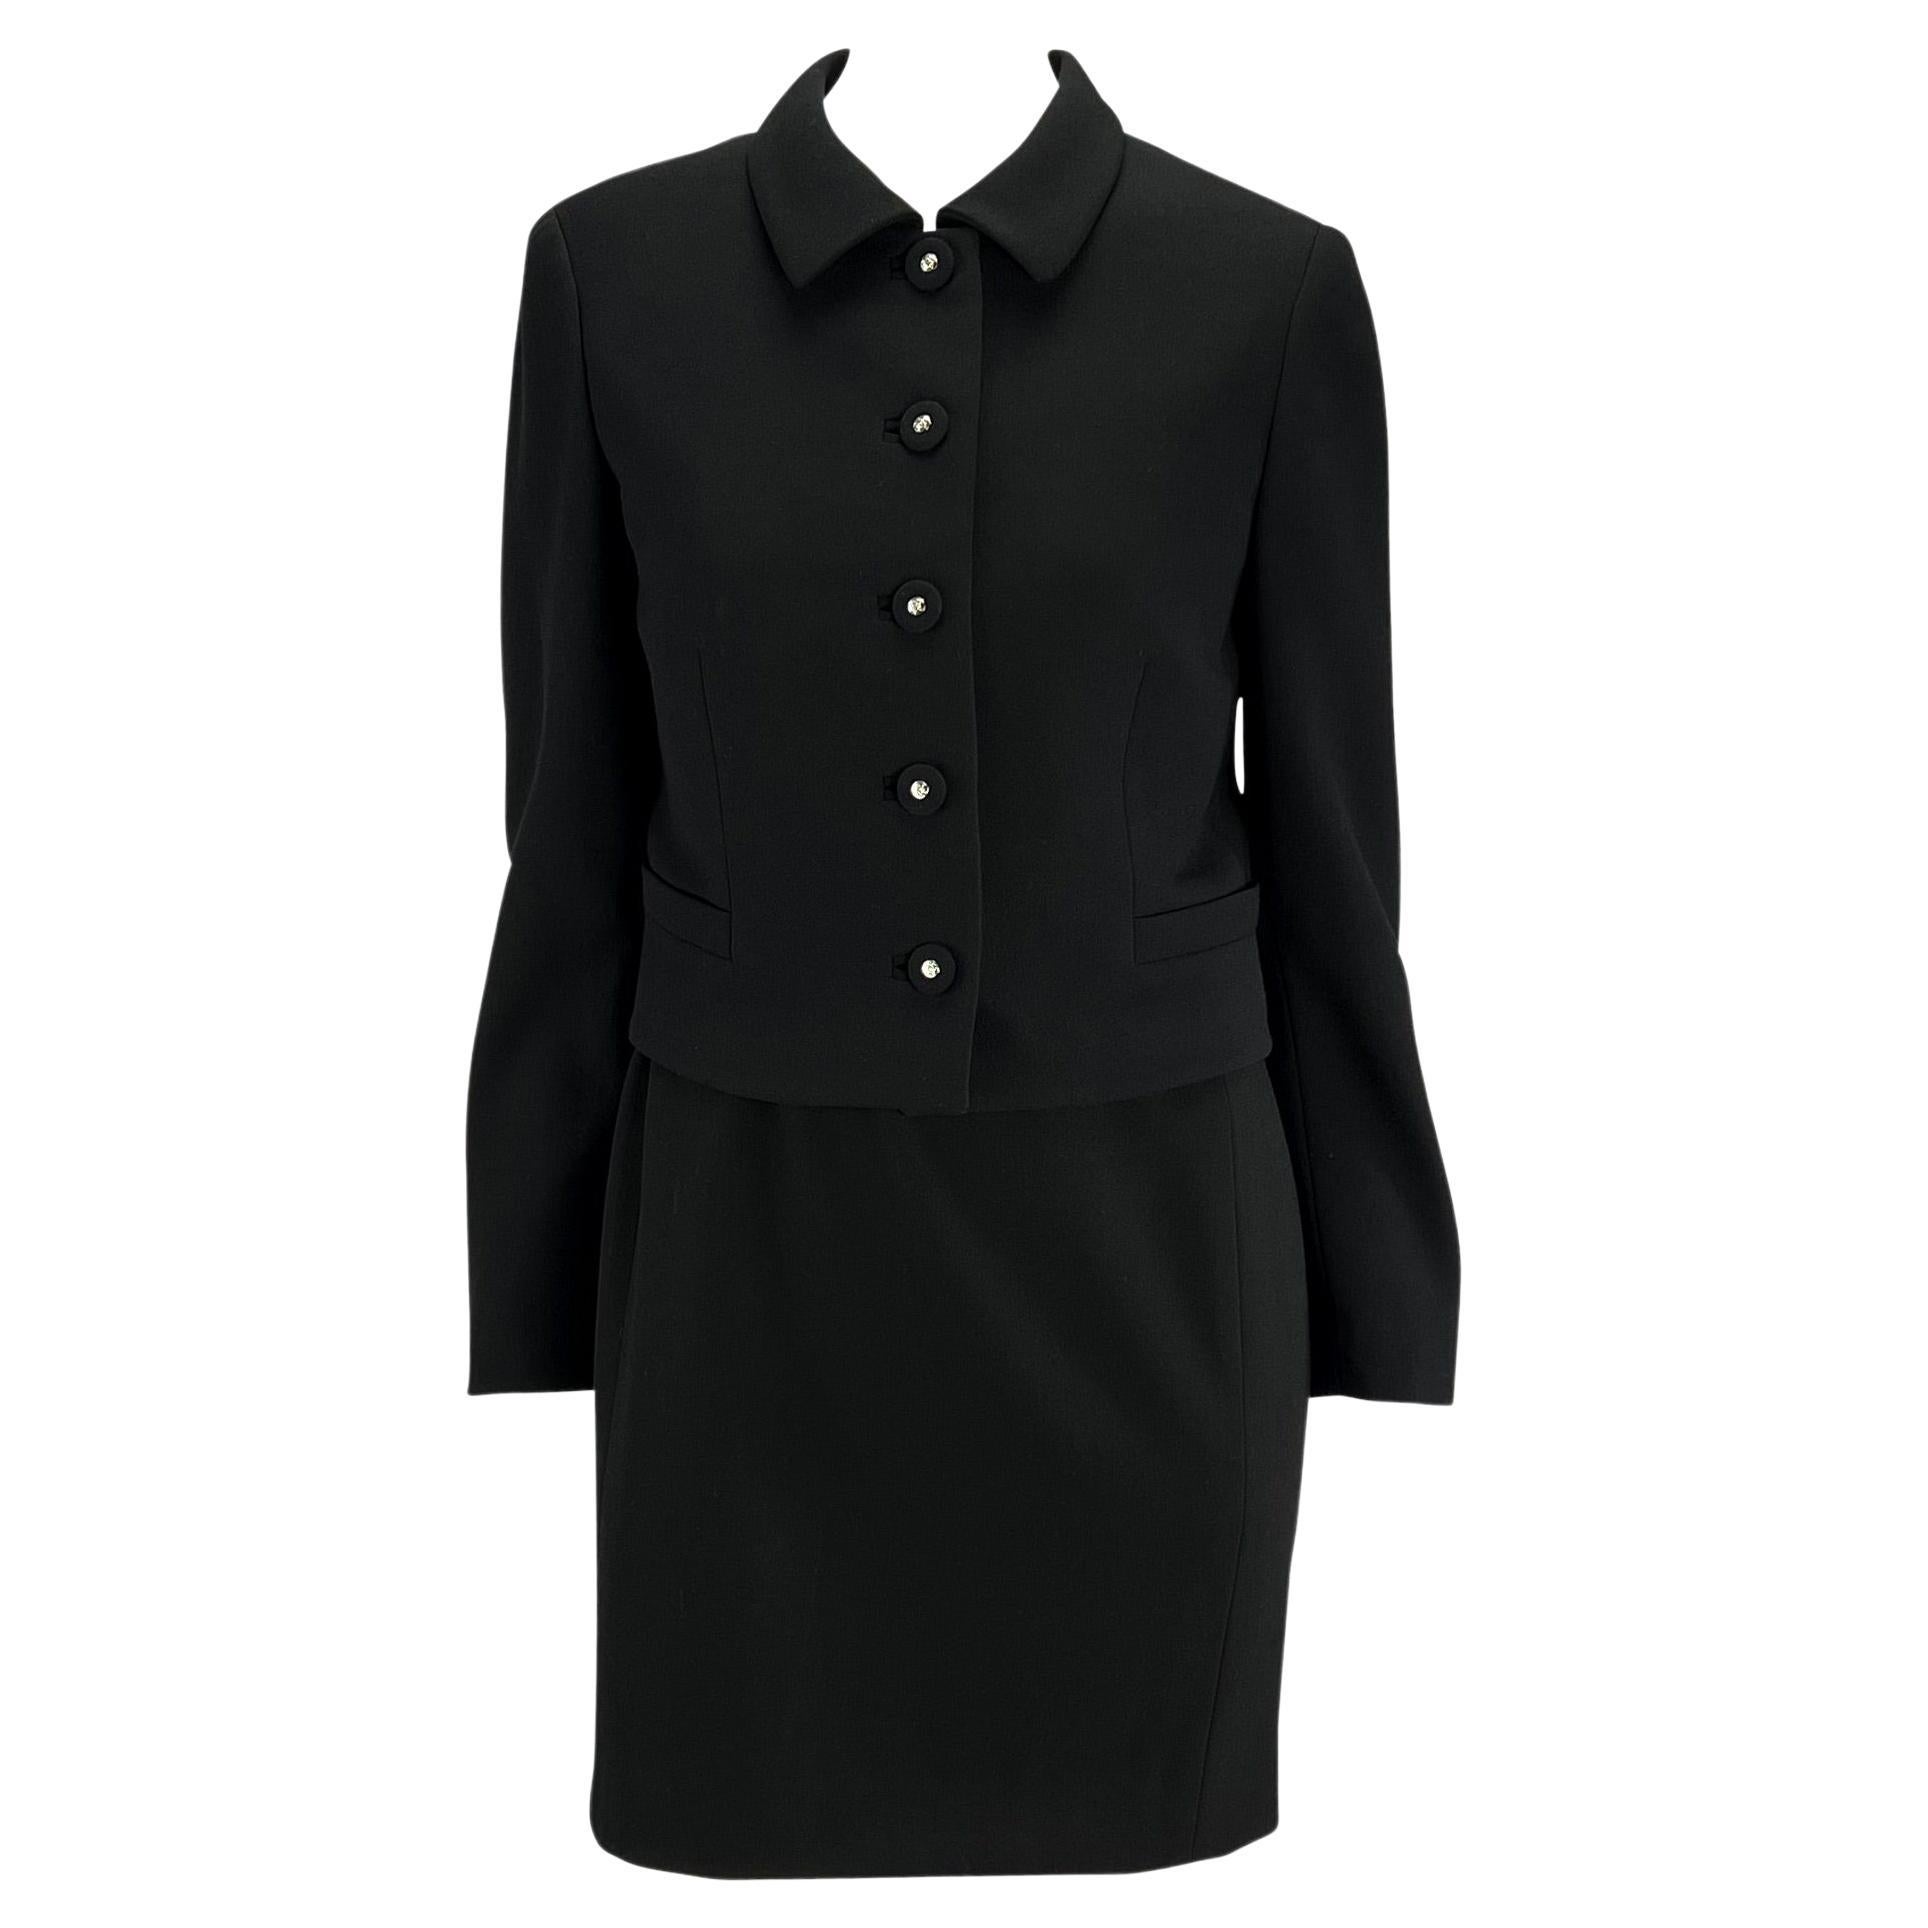 S/S 1996 Gianni Versace Couture Black Wool Medusa Button Dress Jacket Set